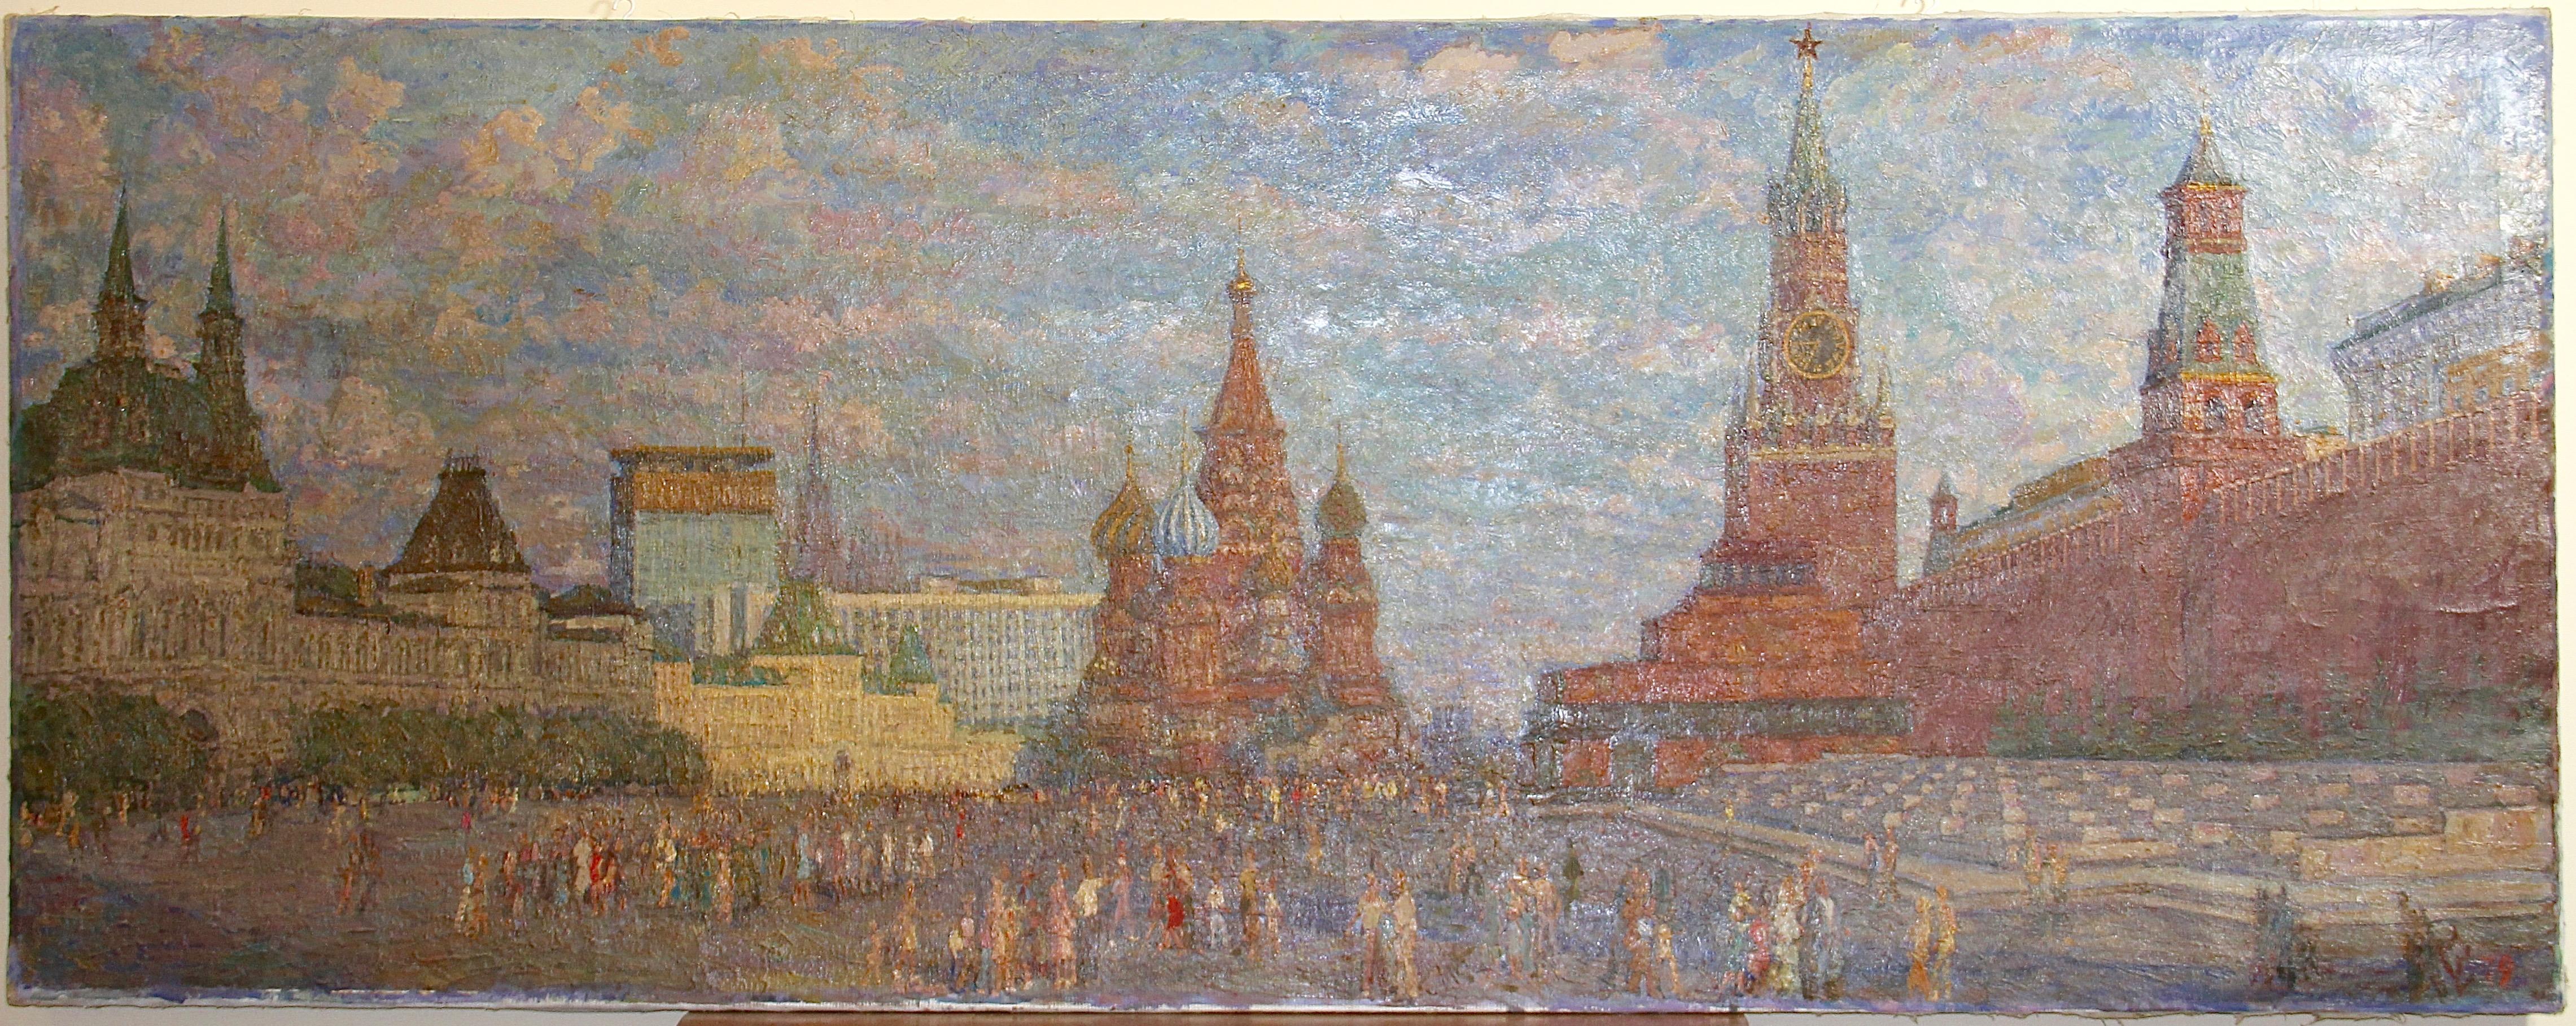 On the Red Square, Kremlin, Moskau – Realismus, Landschaftsgemälde, 20. Jahrhundert – Painting von Solovykh Gennady Ivanovich